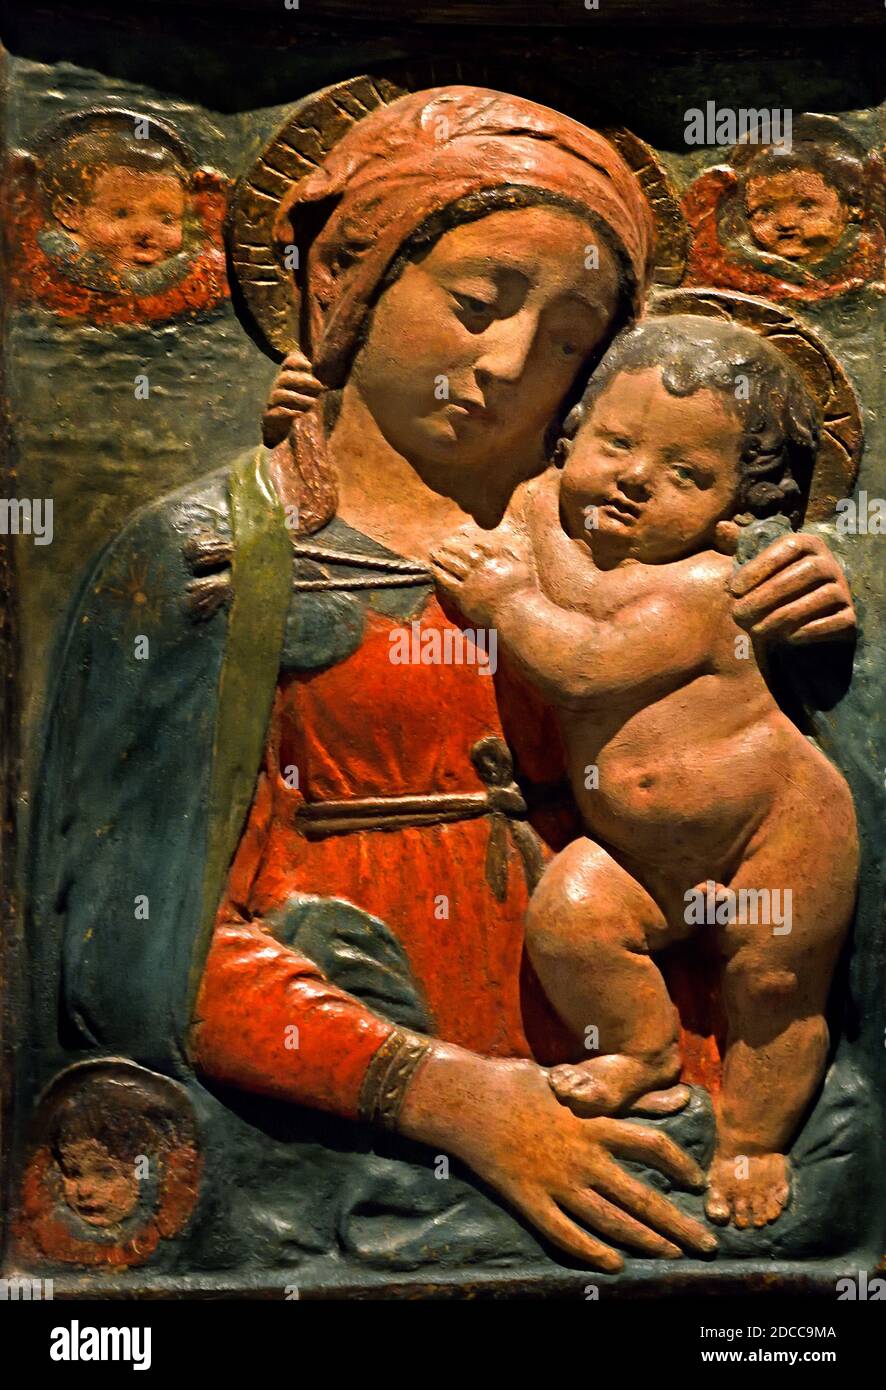 Virgin and Child, Benedetto da Maiano 1442 – 1497 Italian sculptor of the early Renaissance. Italian, Italy. Stock Photo